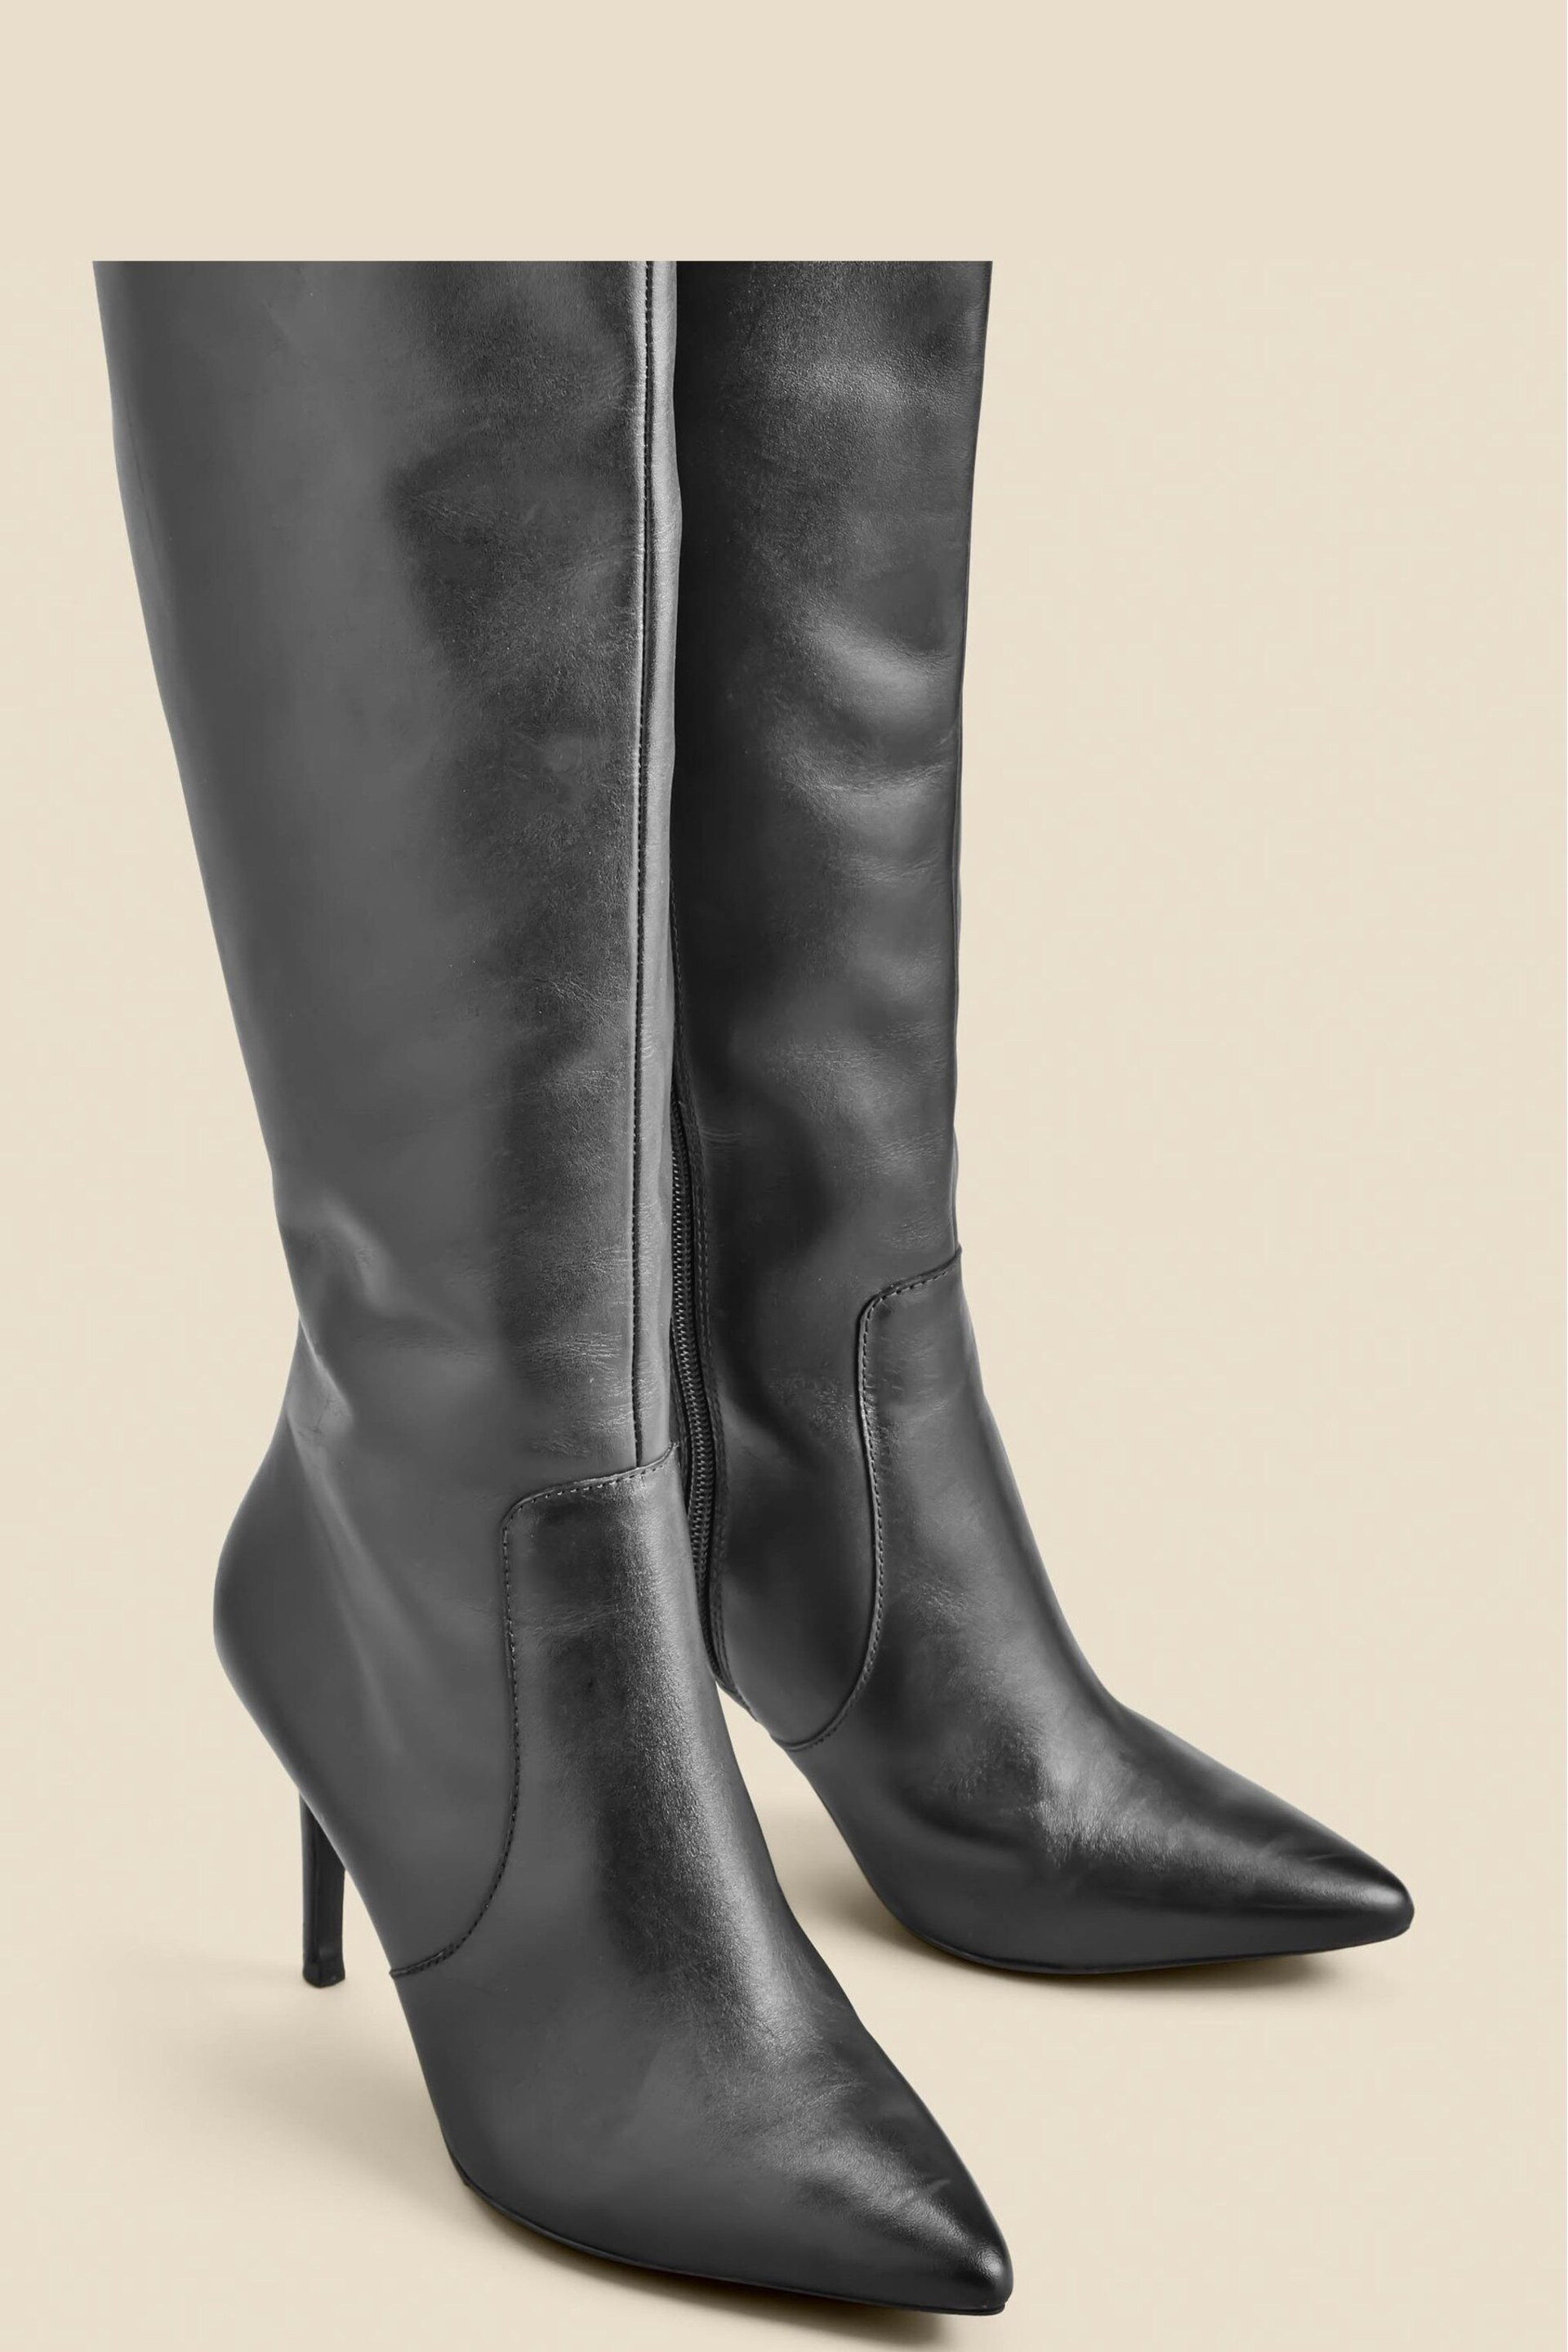 Sosandar Black Leather Stiletto Heel Knee High Boots - Image 3 of 5